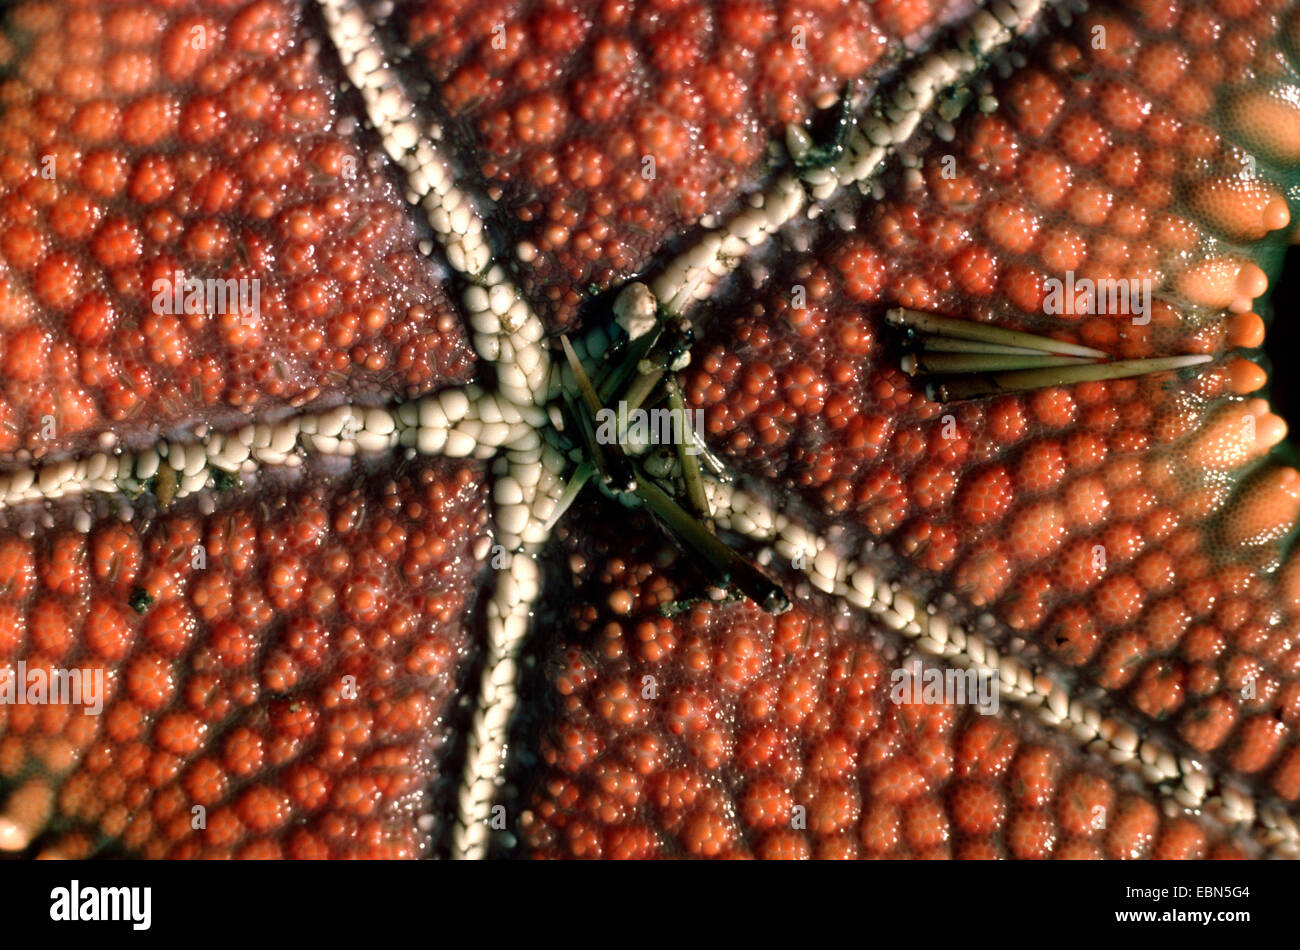 cushion stars (Oreasteridae), underside with remains of an eaten sea urchin, Indopazifik Stock Photo